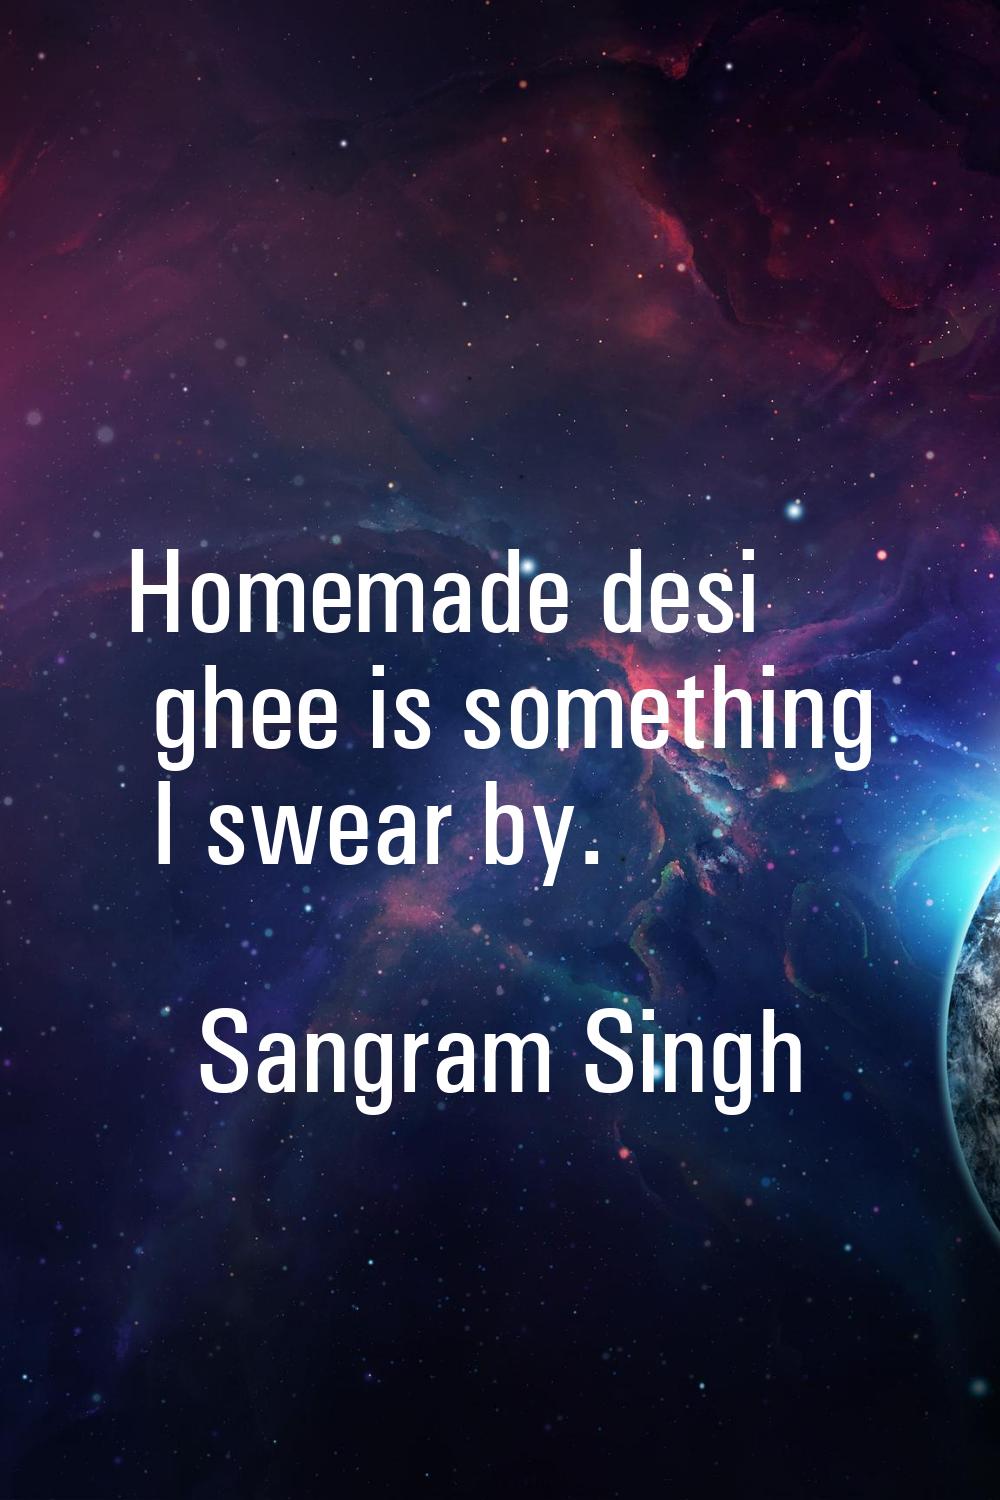 Homemade desi ghee is something I swear by.